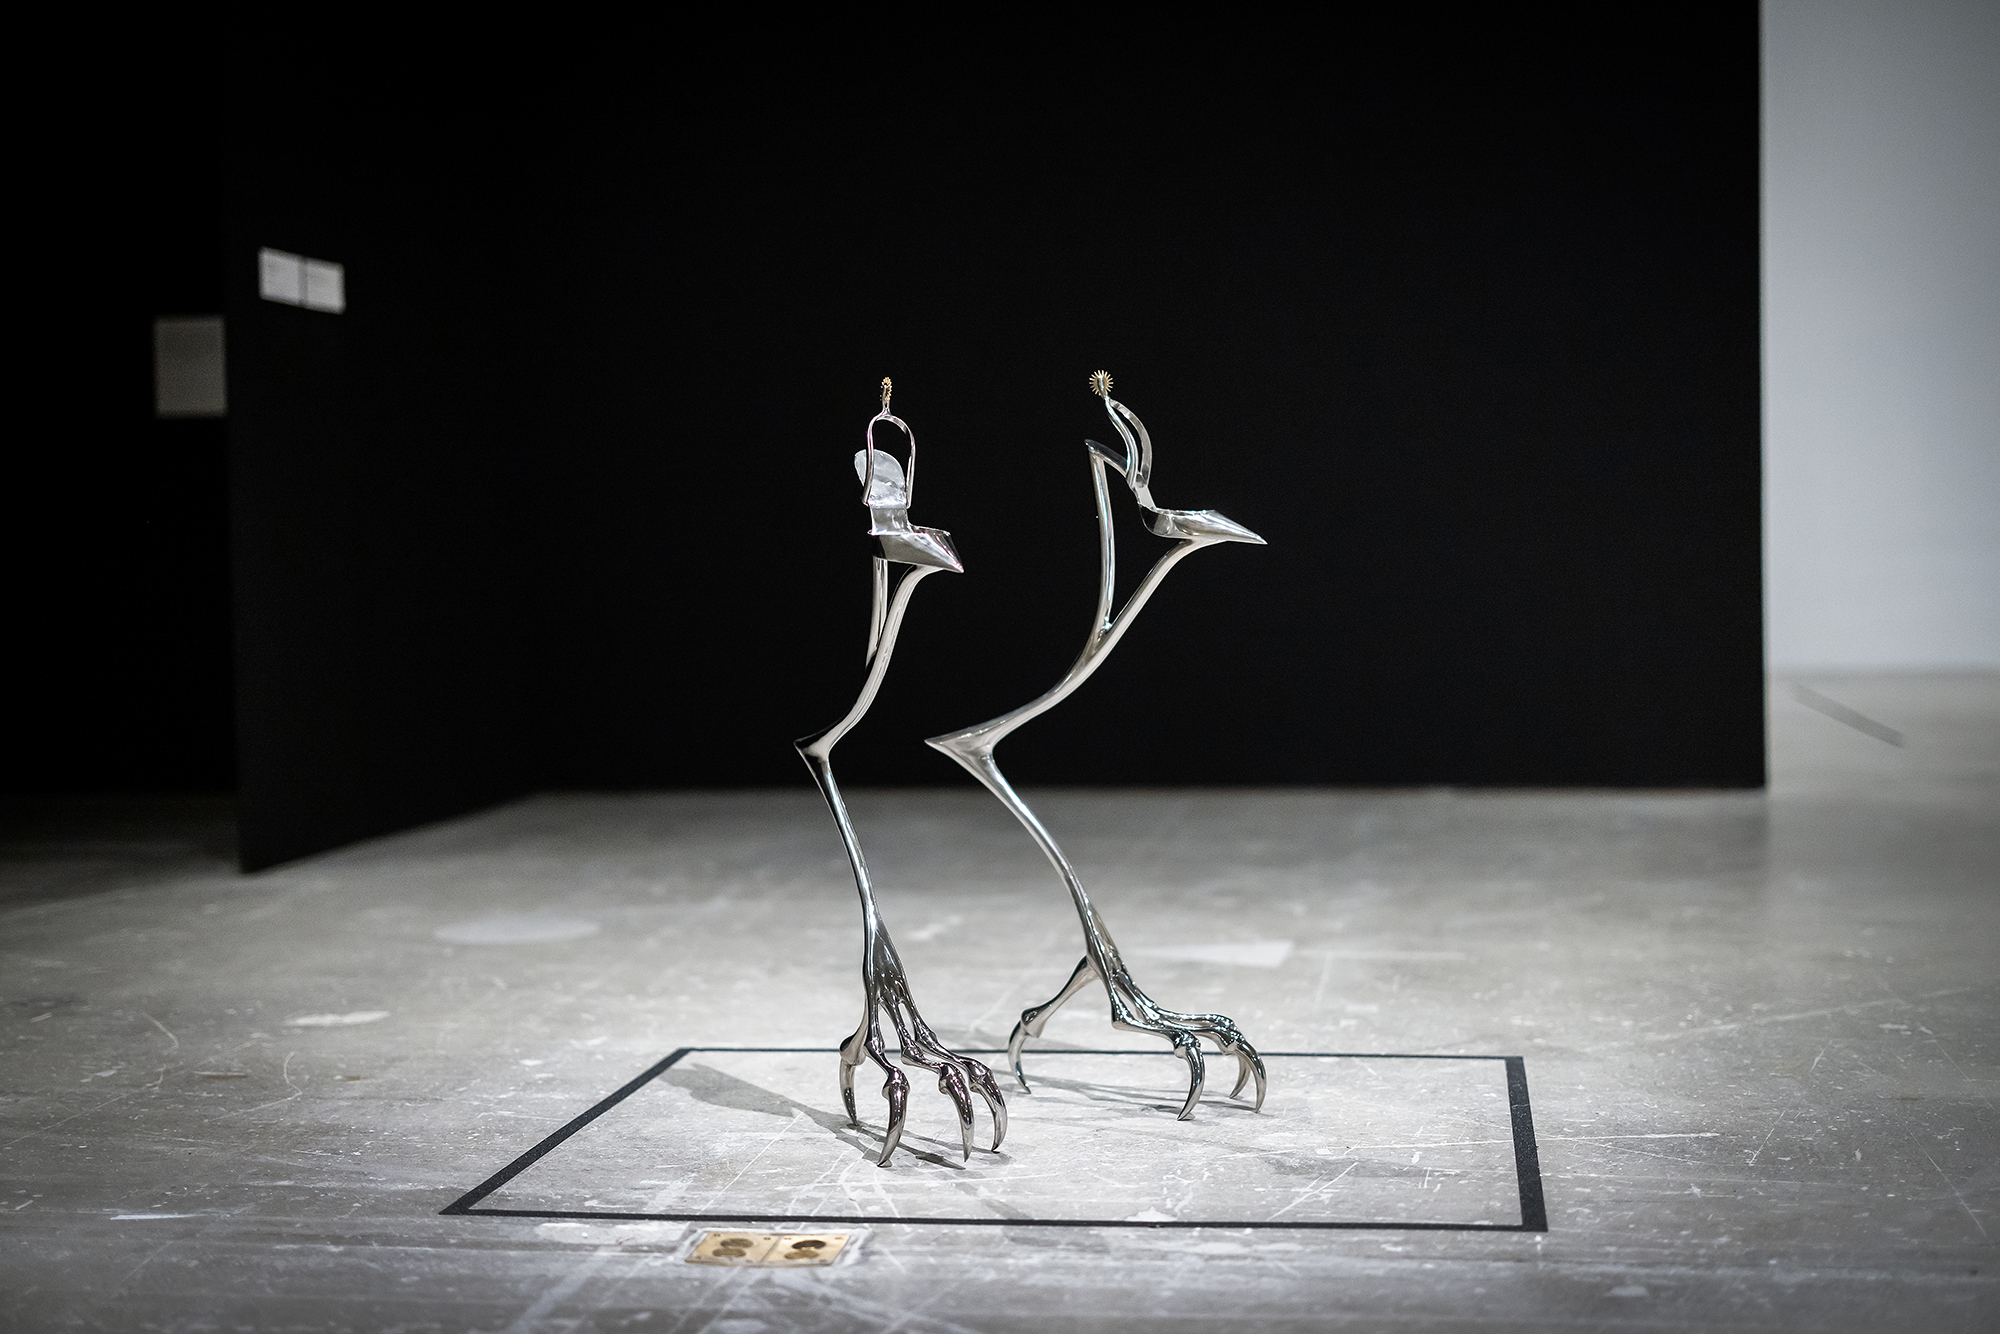 Metal stilts on heels, as sculpture.